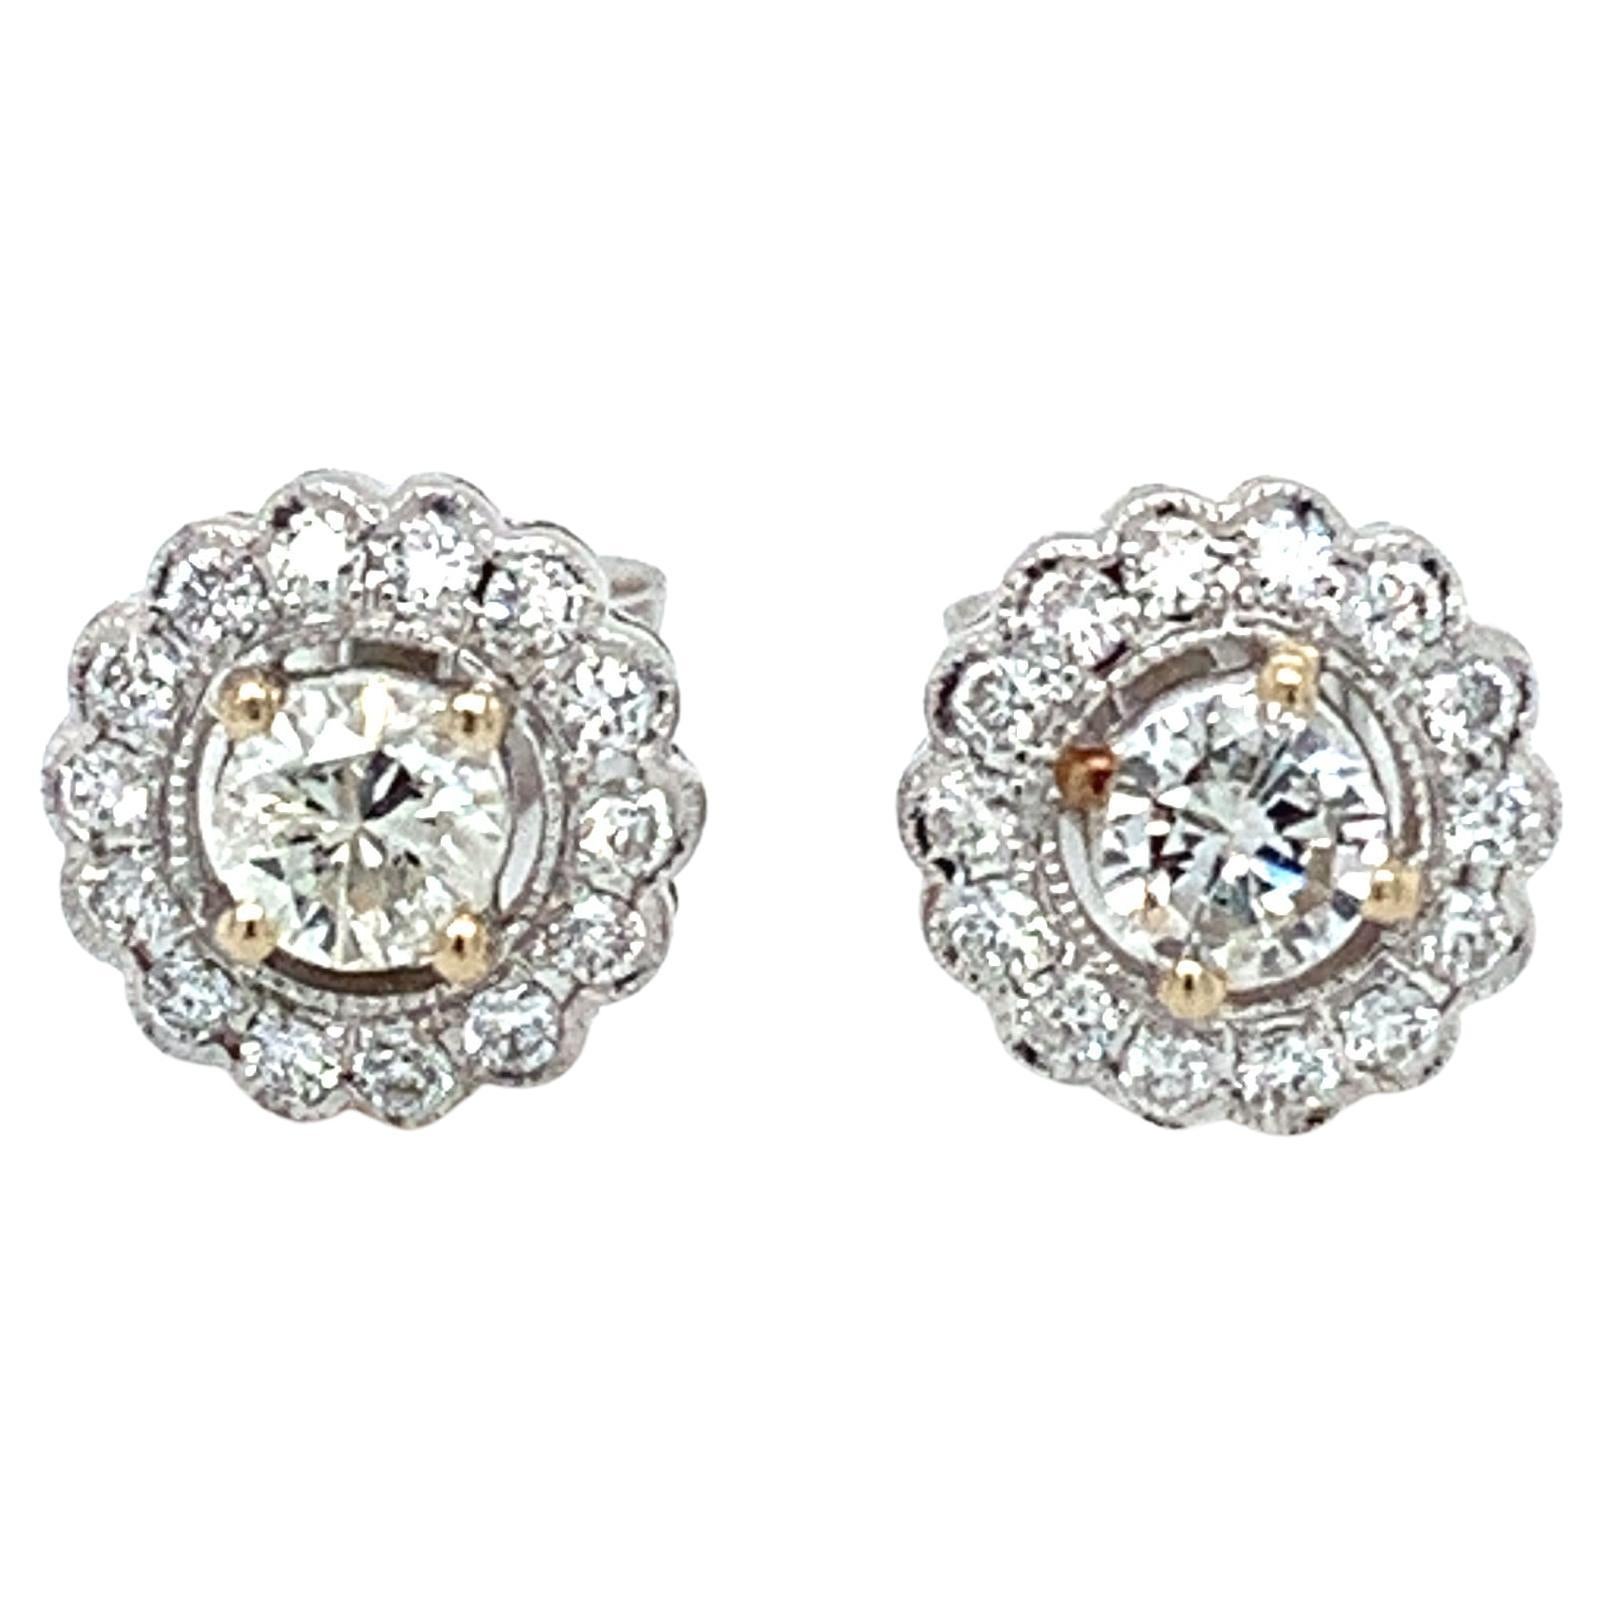 Diamond halo stud earrings 18k white gold